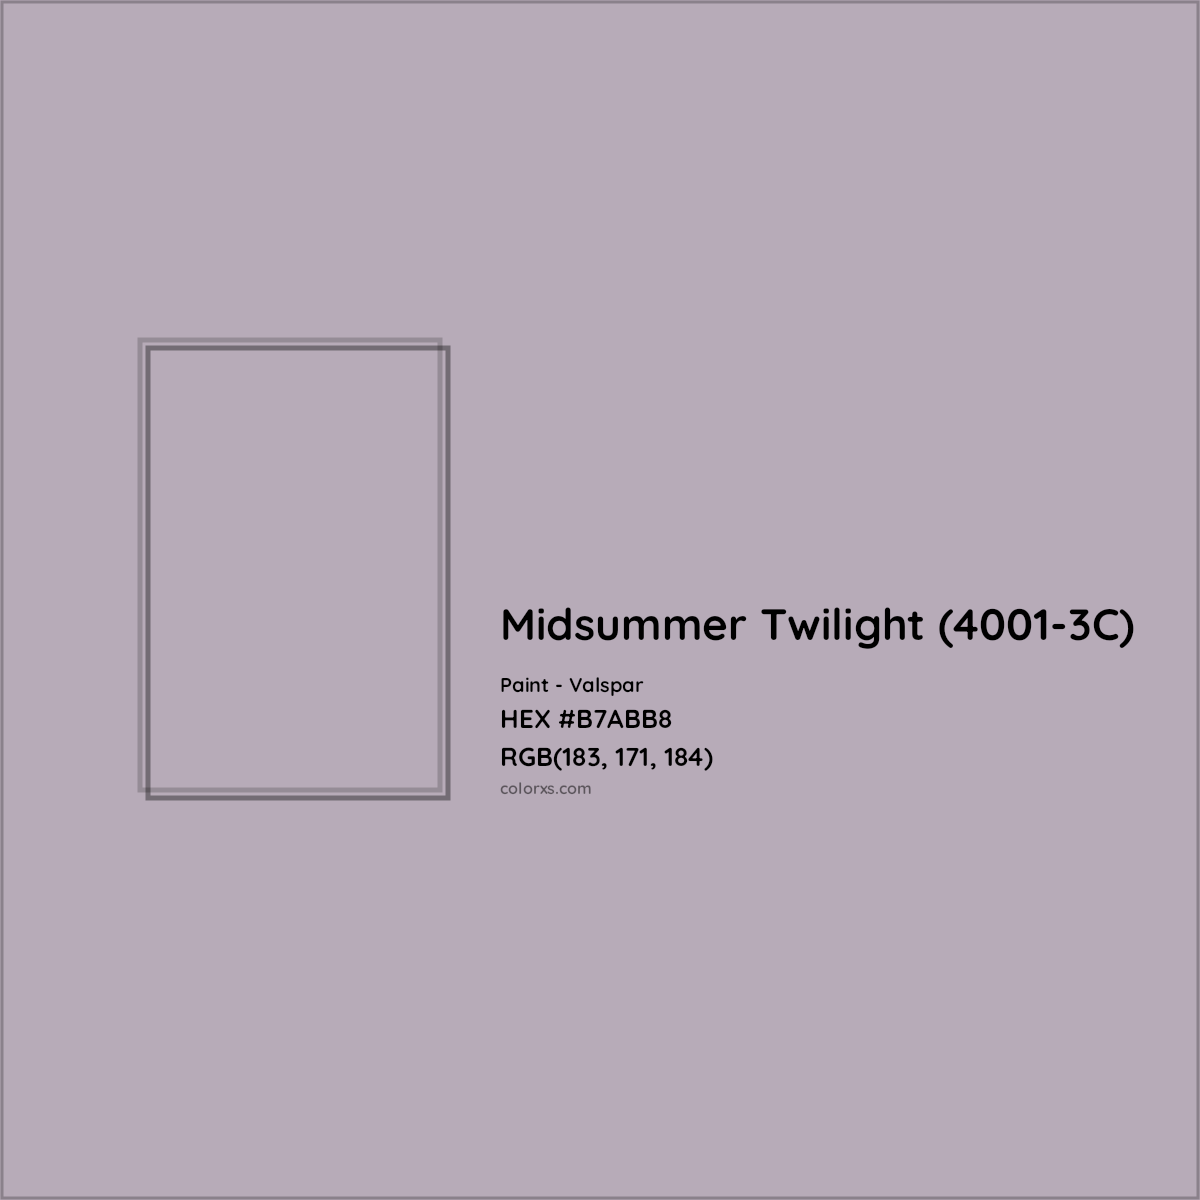 HEX #B7ABB8 Midsummer Twilight (4001-3C) Paint Valspar - Color Code